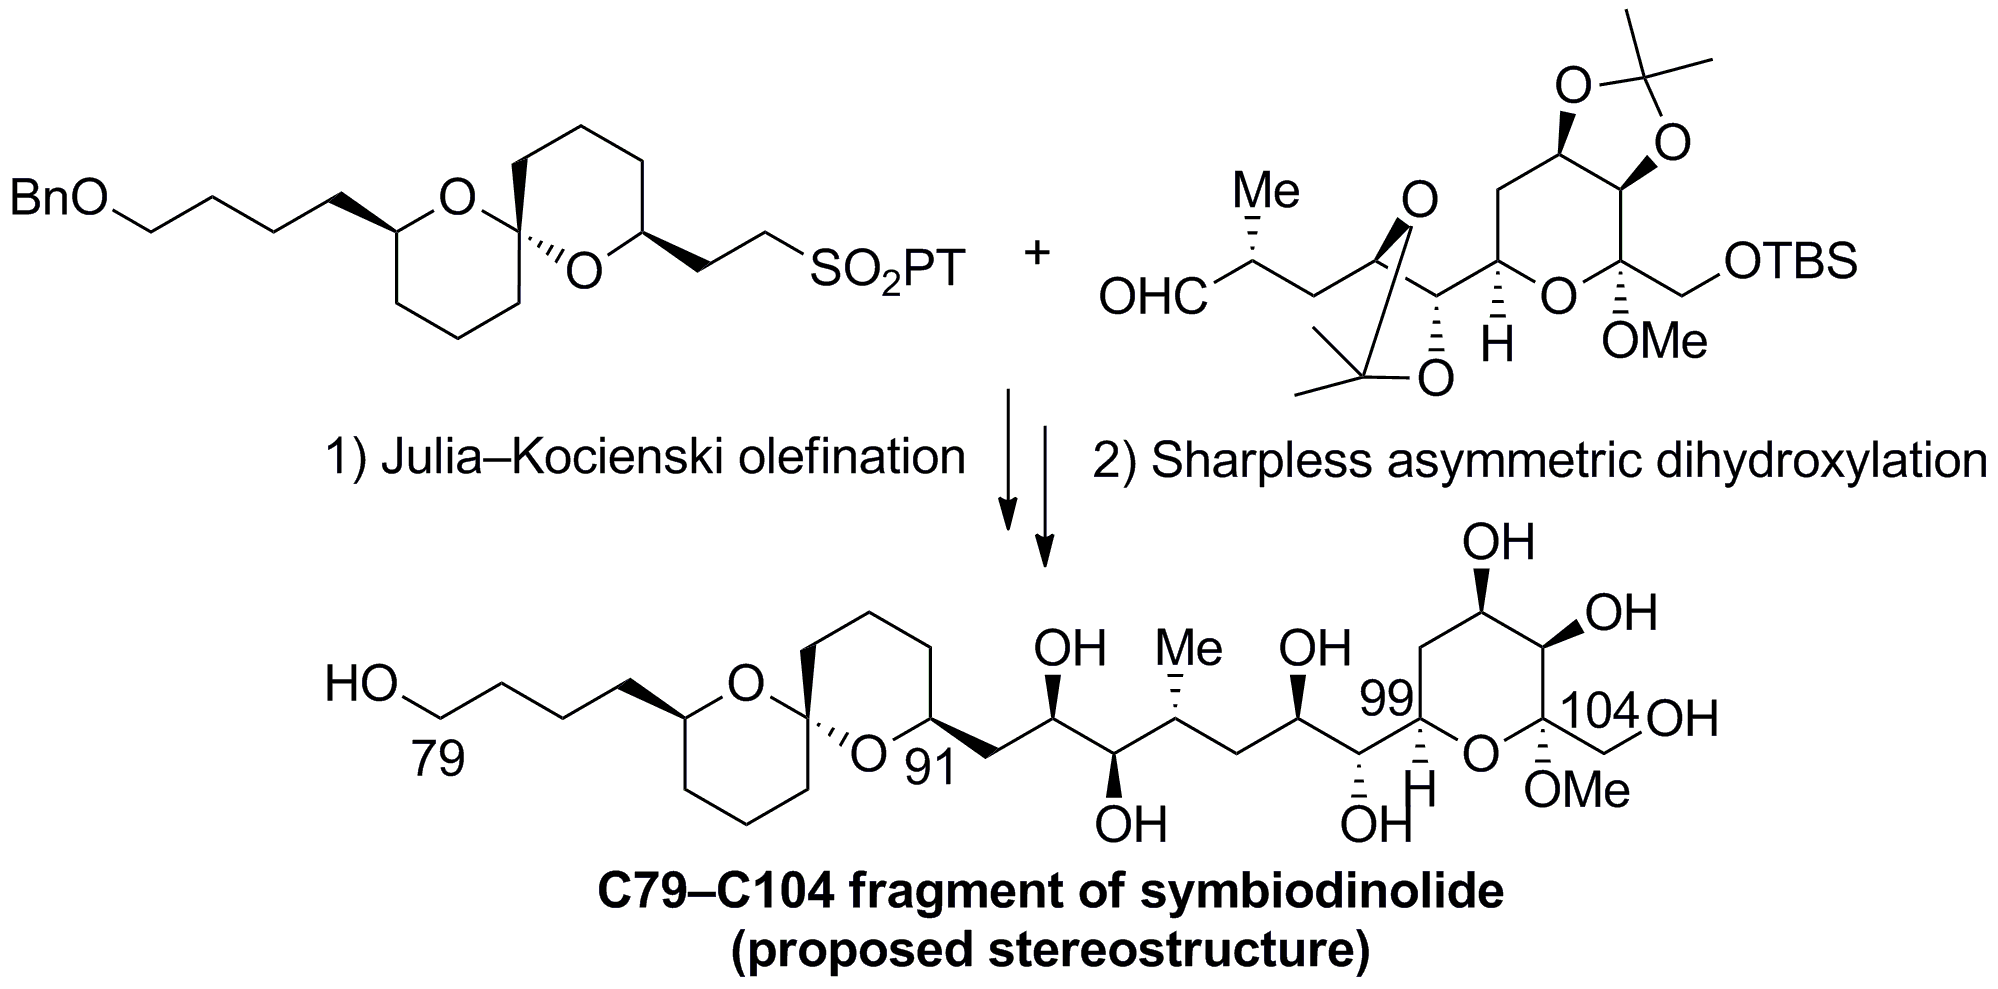 Symbiodinolide synthesis